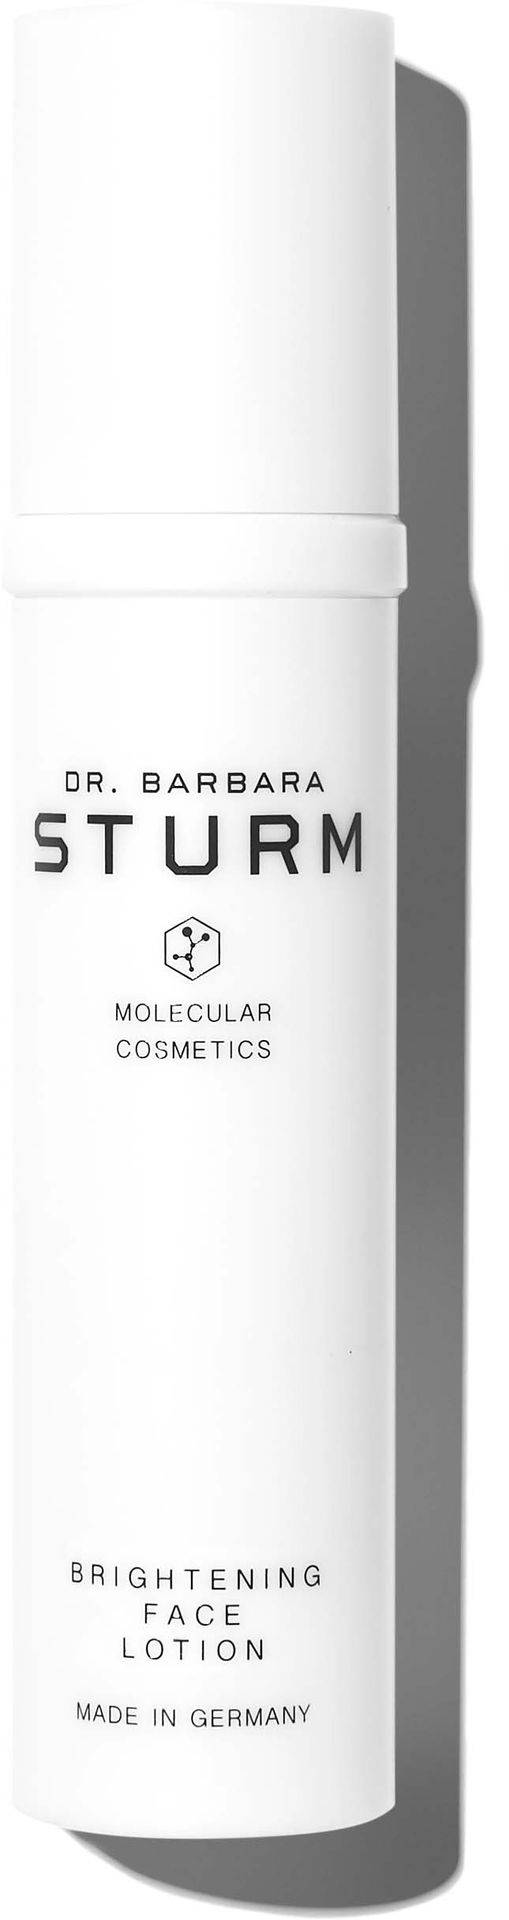 Dr. Barbara Sturm Brightening Lotion 50ml - Balsam do twarzy